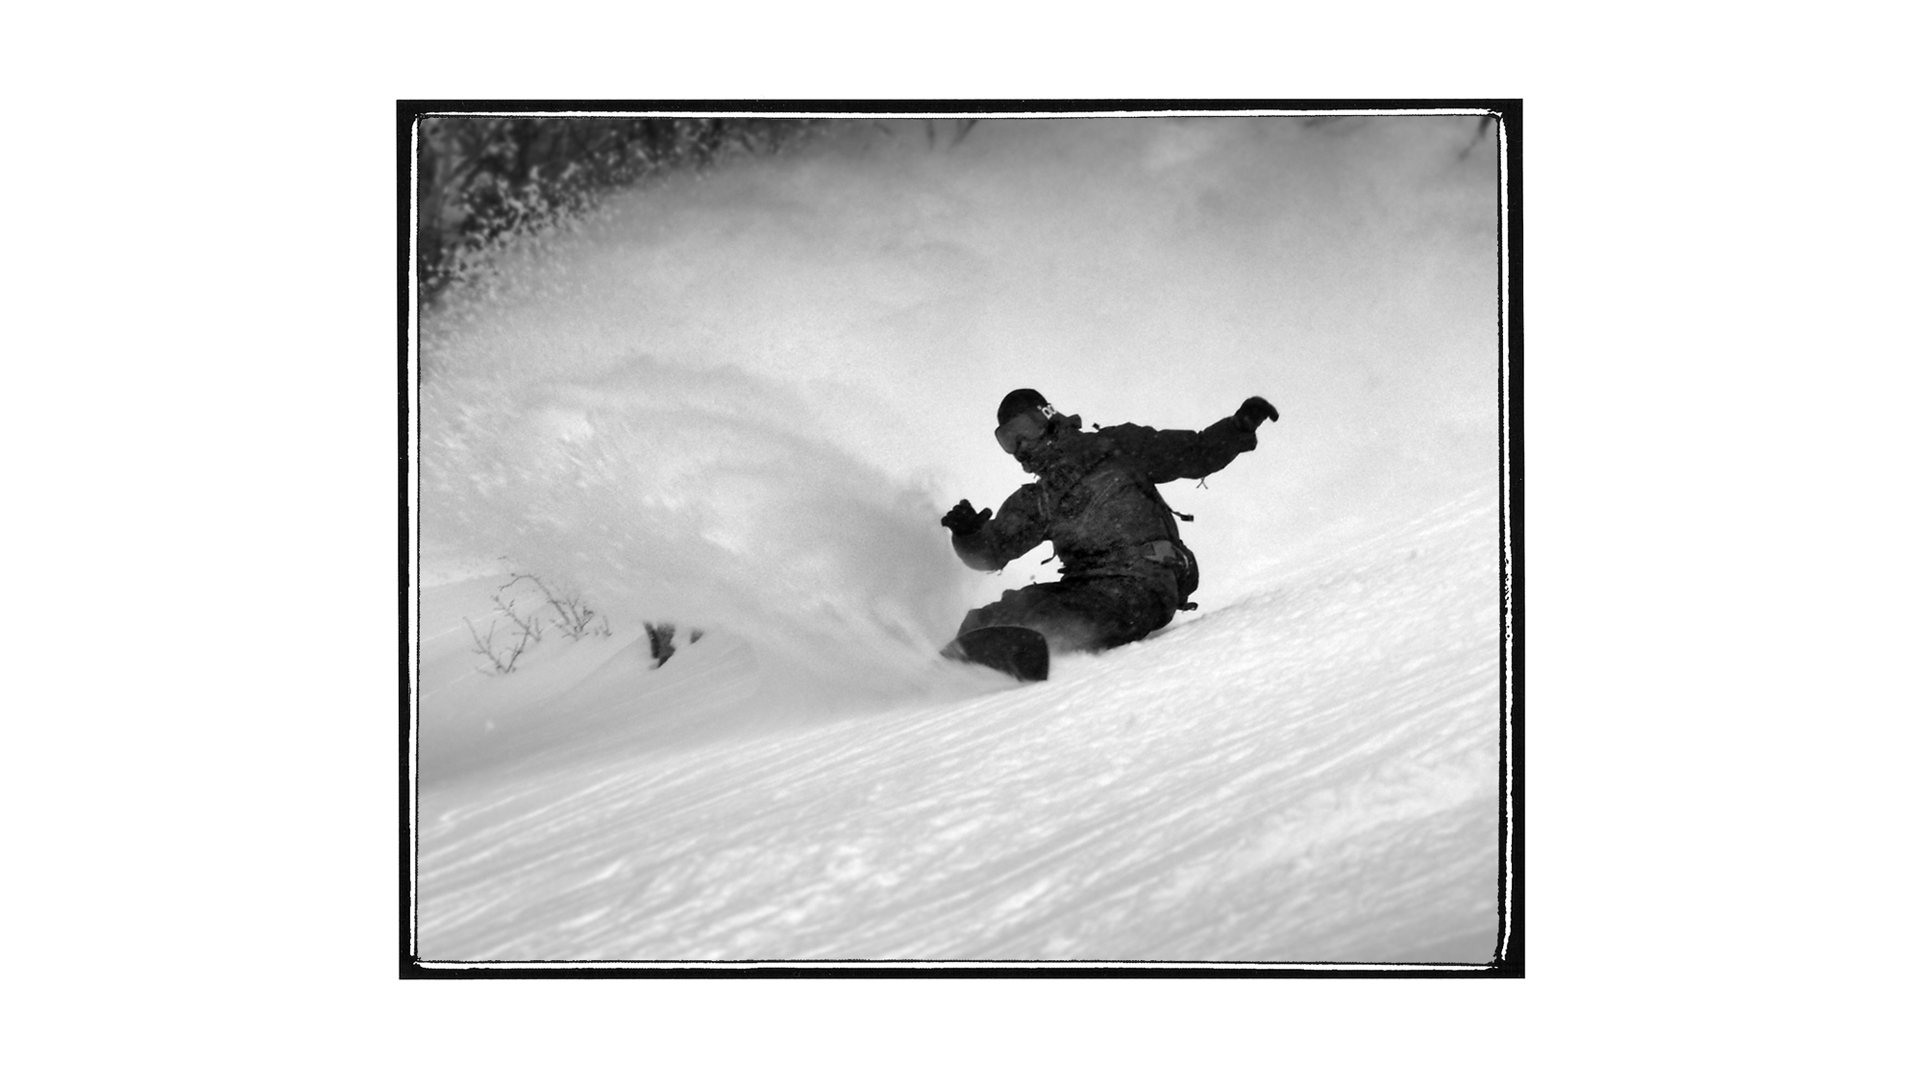 Taro Tamai in Snowsurf - The Snowboarders Journal